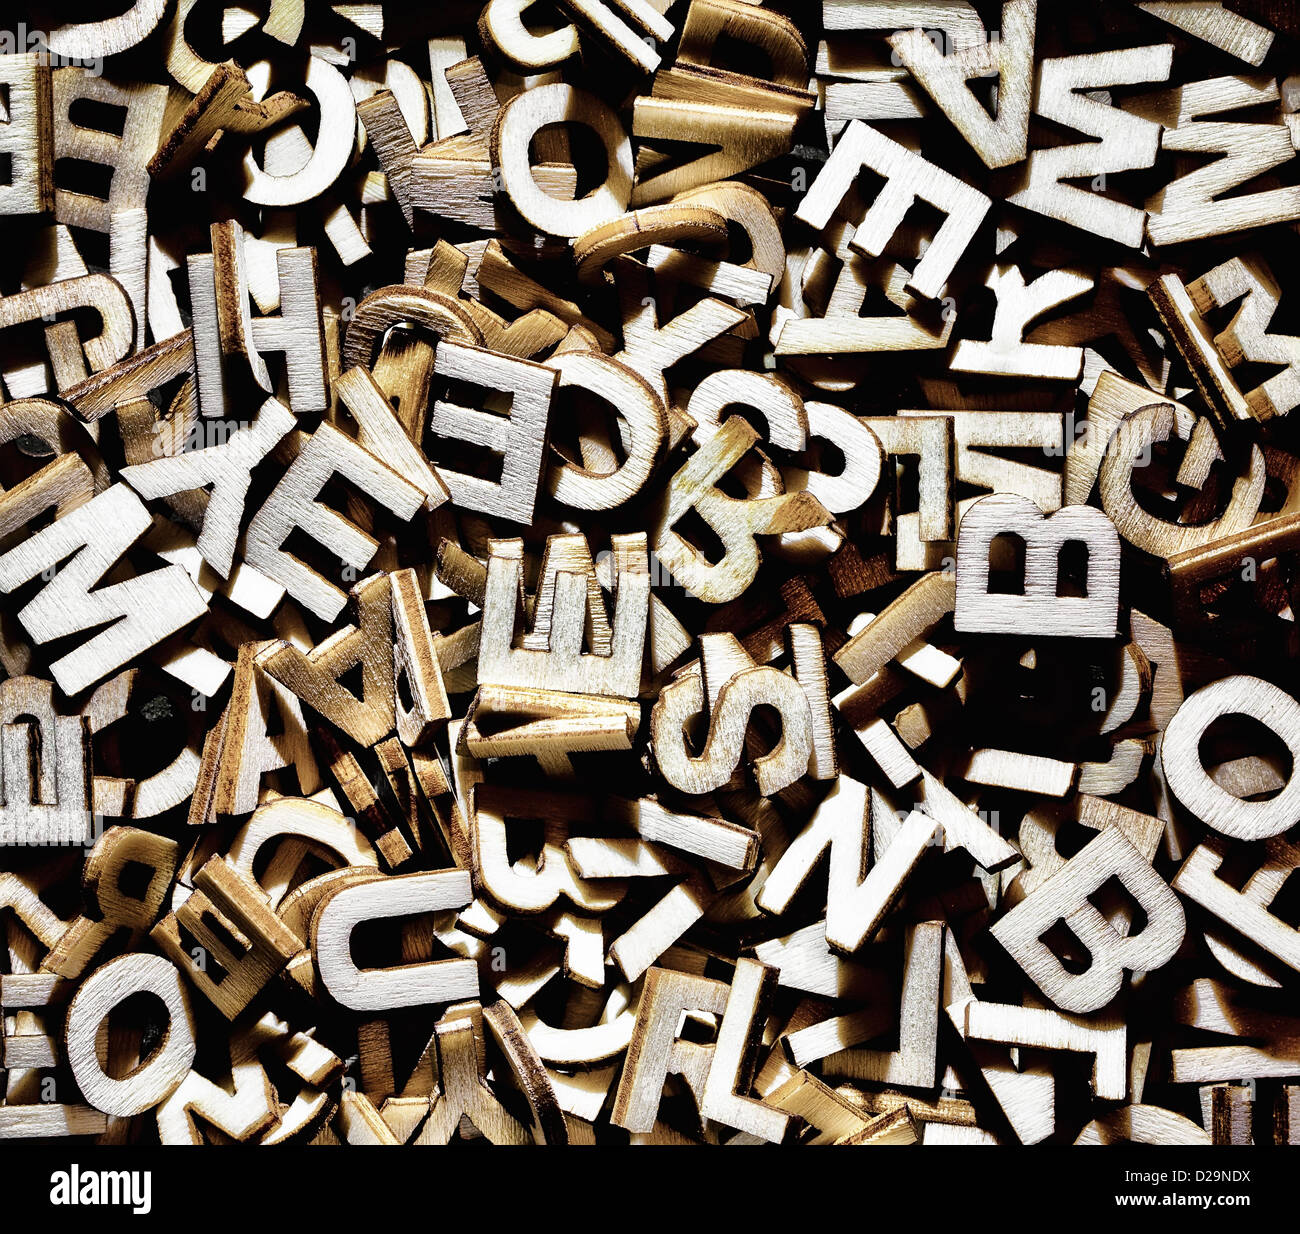 Random alphabet letters in a pile Stock Photo